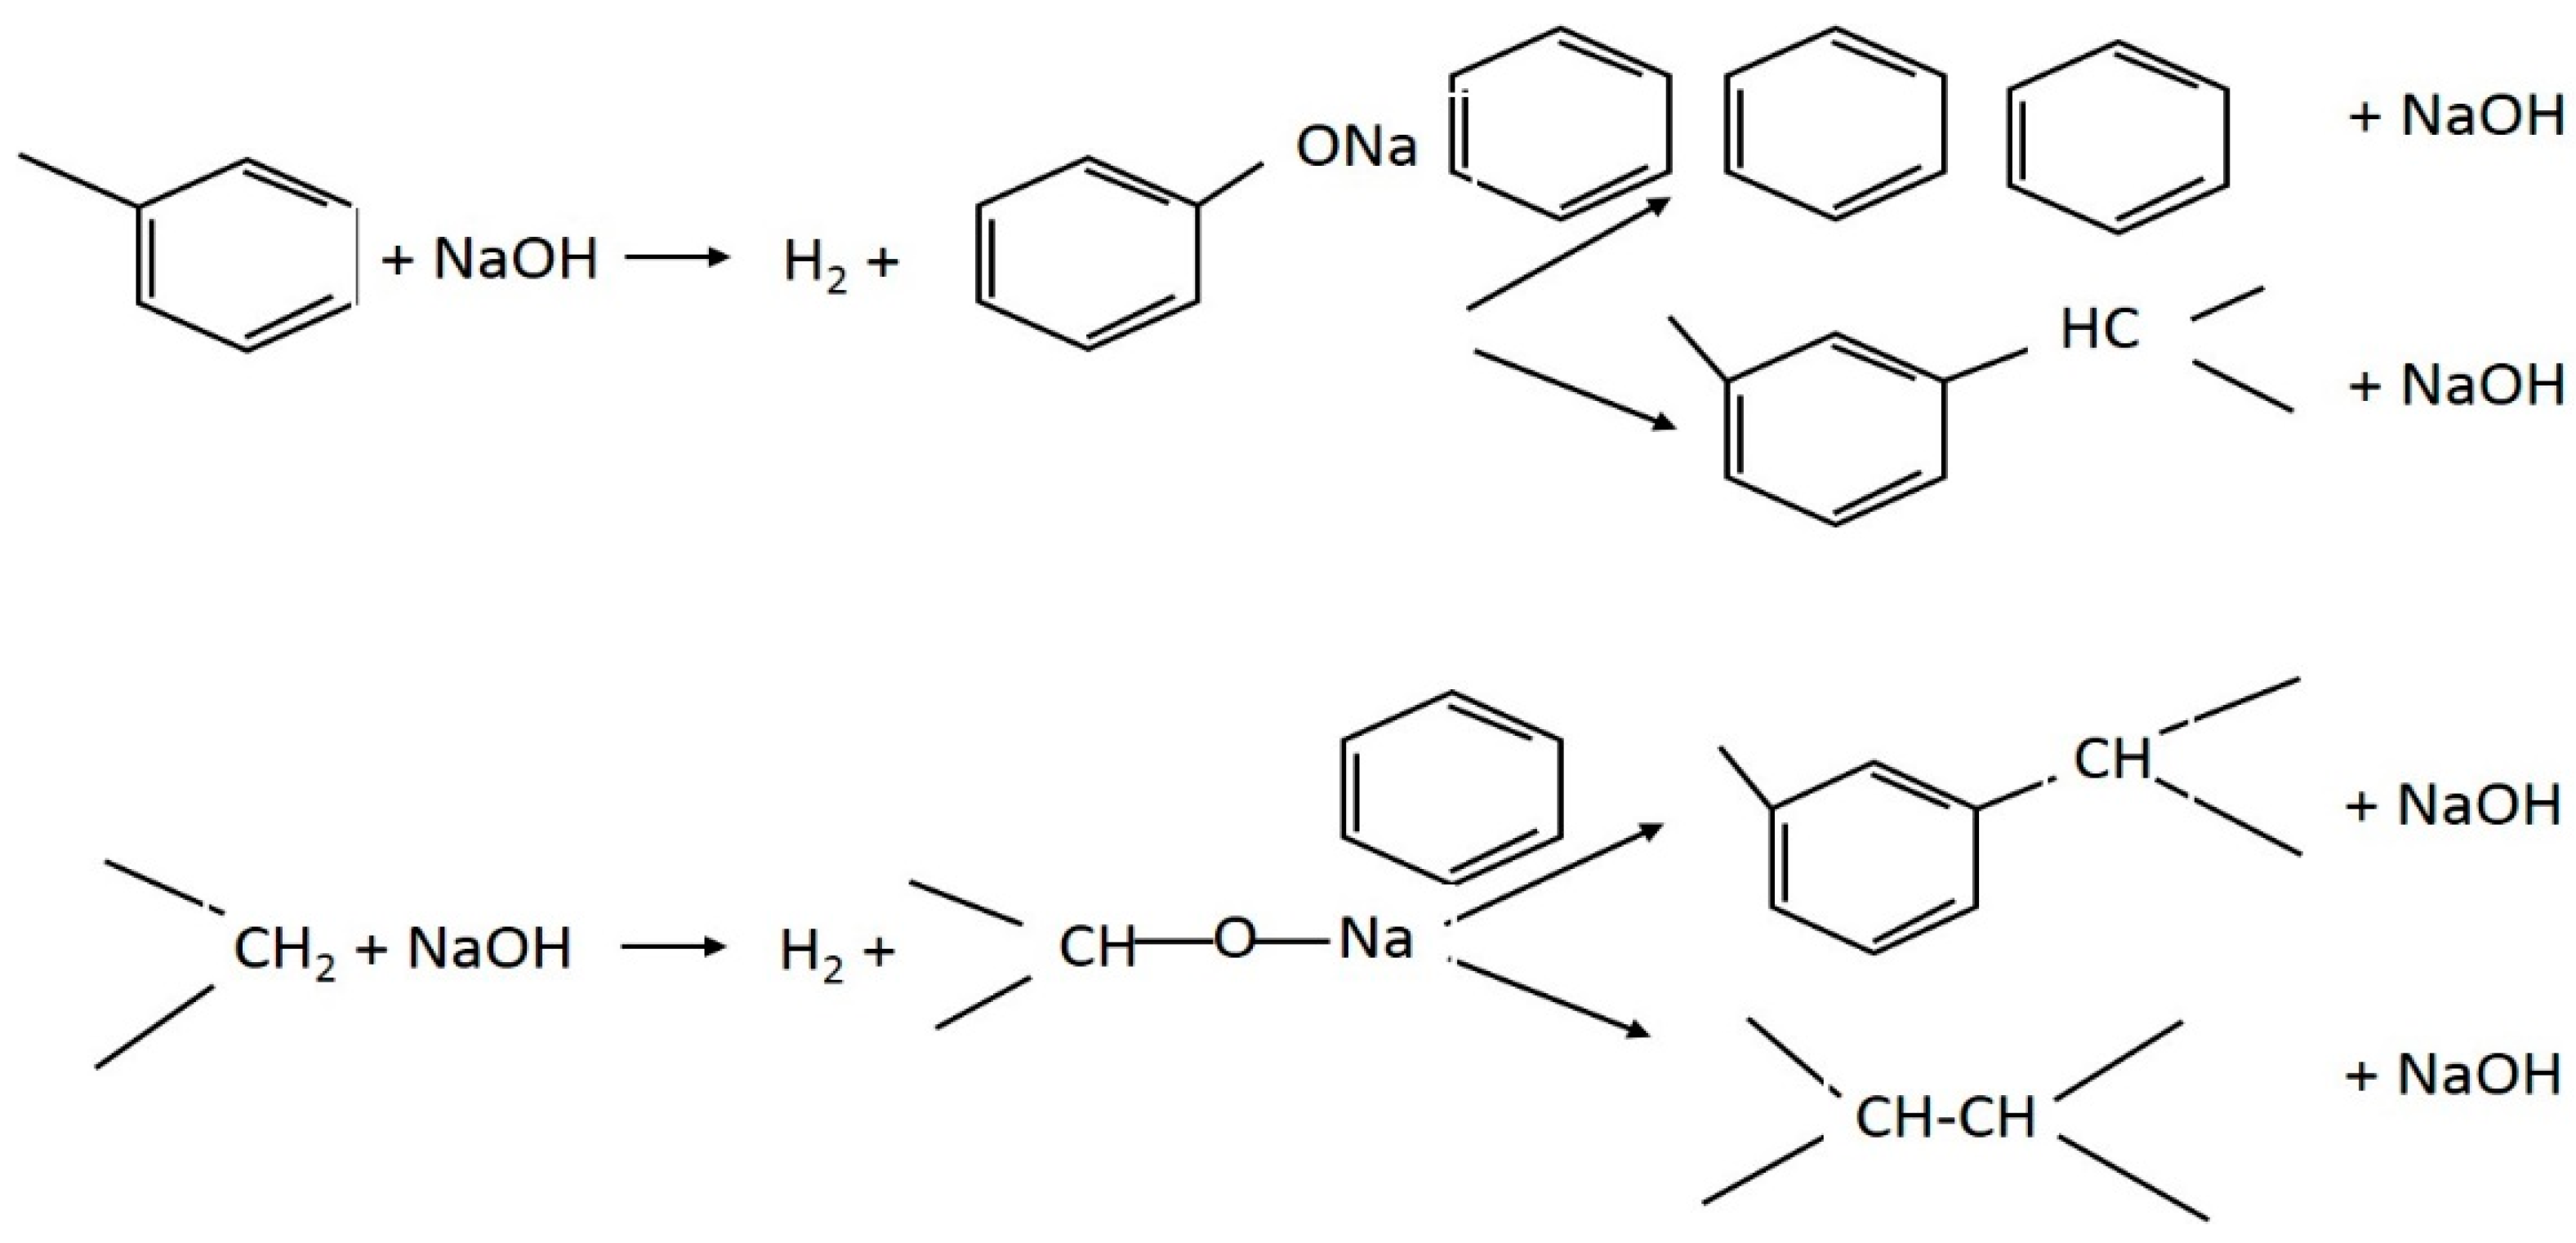 Б zn и naoh p p. Нитротолуол NAOH. П-нитротолуол + ZN + NAOH. Нитробензол NAOH. Нитротолуол SN HCL.